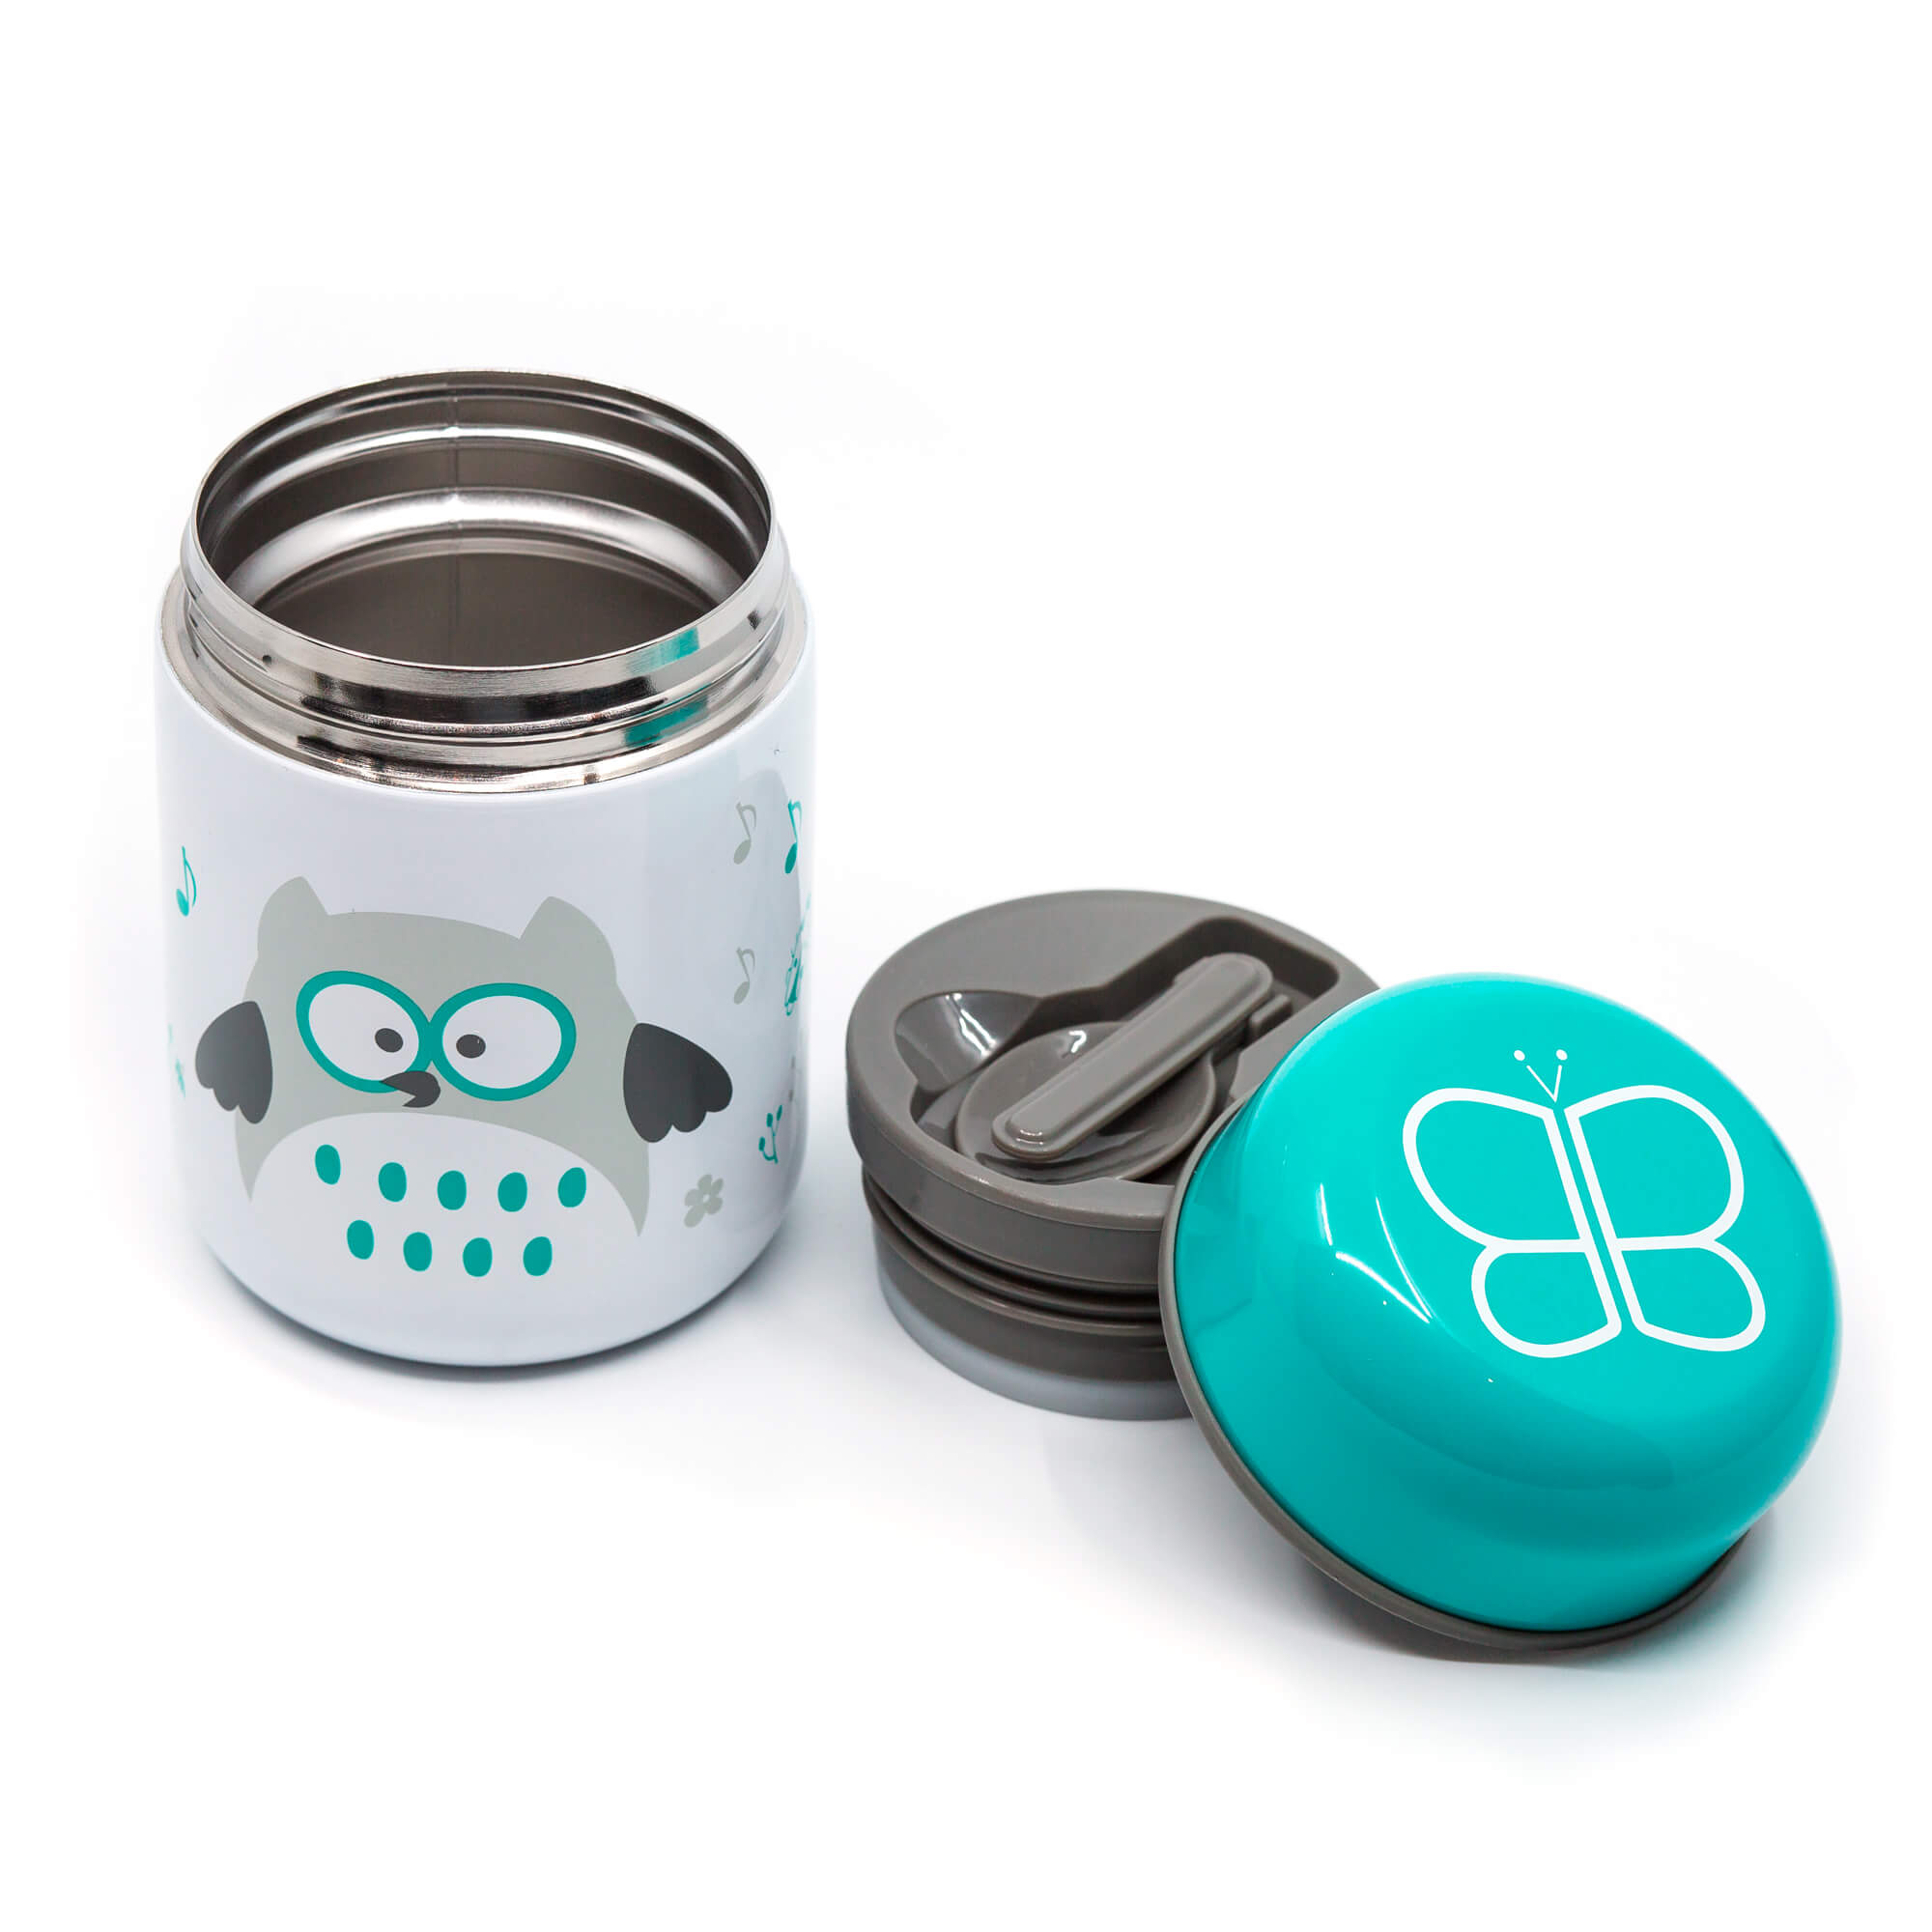 Foöd: Thermal Food Container with Spoon || Foöd: Le contenant thermos pour bébé